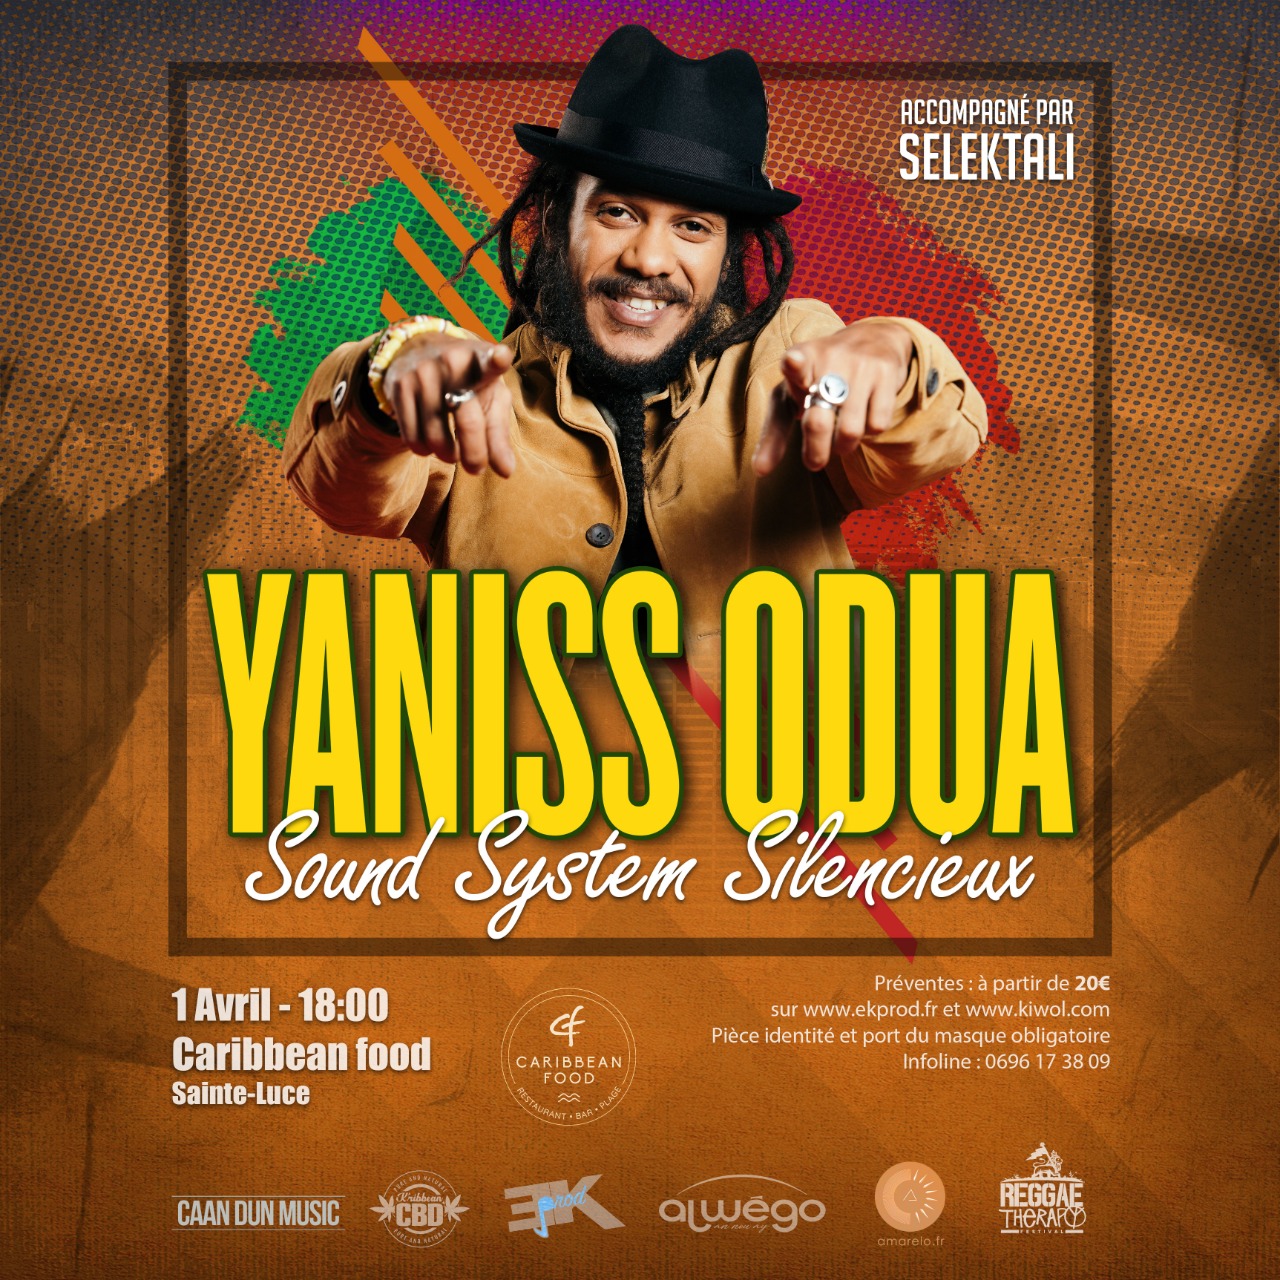 YANISS ODUA - SOUND SYSTEM SILENCIEUX - CARIBBEAN FOOD STE LUCE 